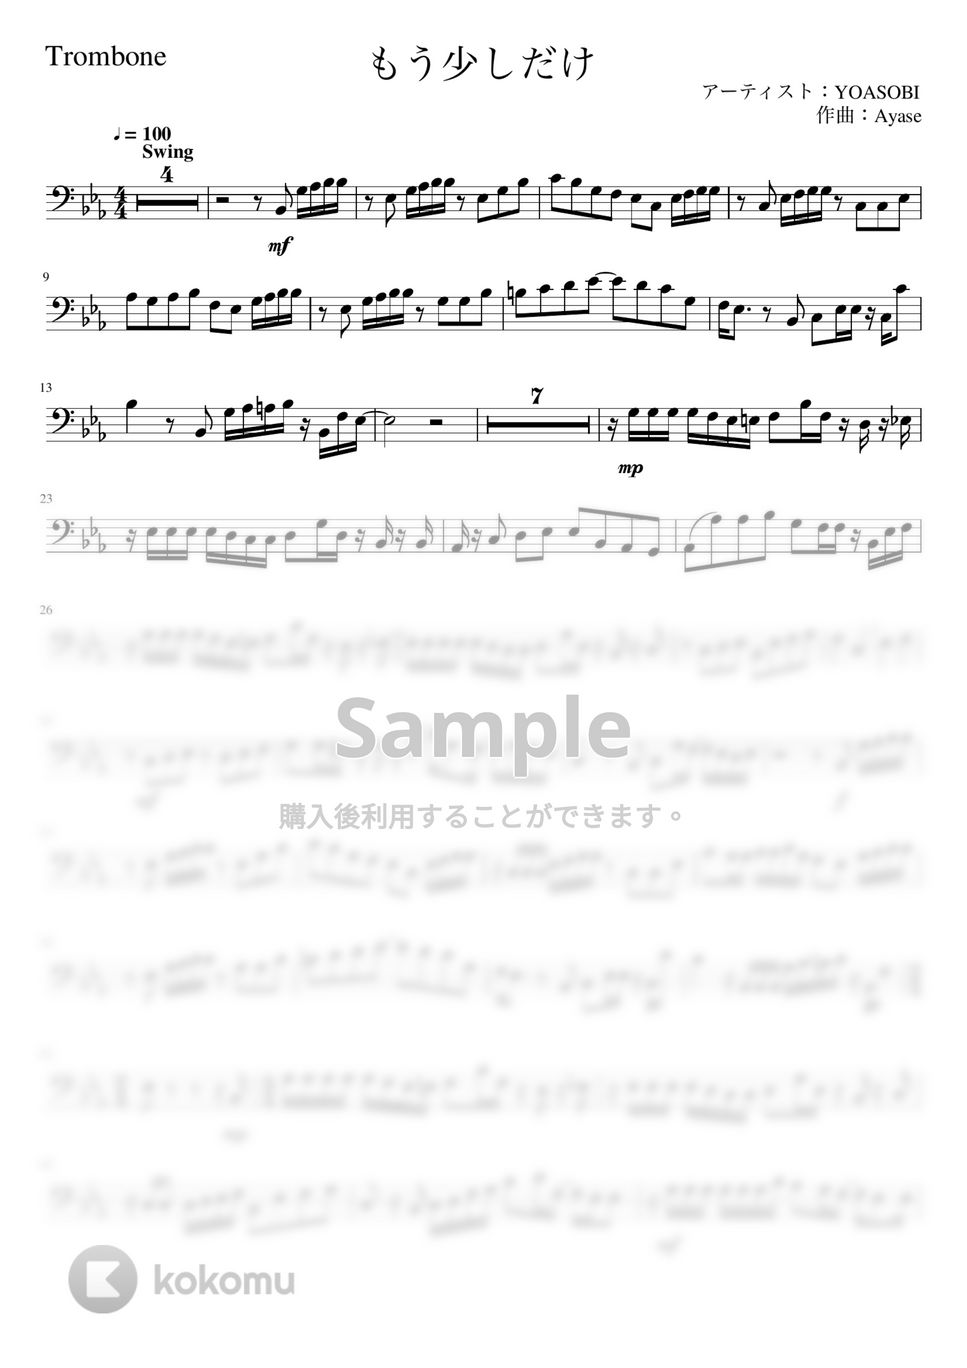 YOASOBI - もう少しだけ (-Trombone Solo- 原キー) by Creampuff